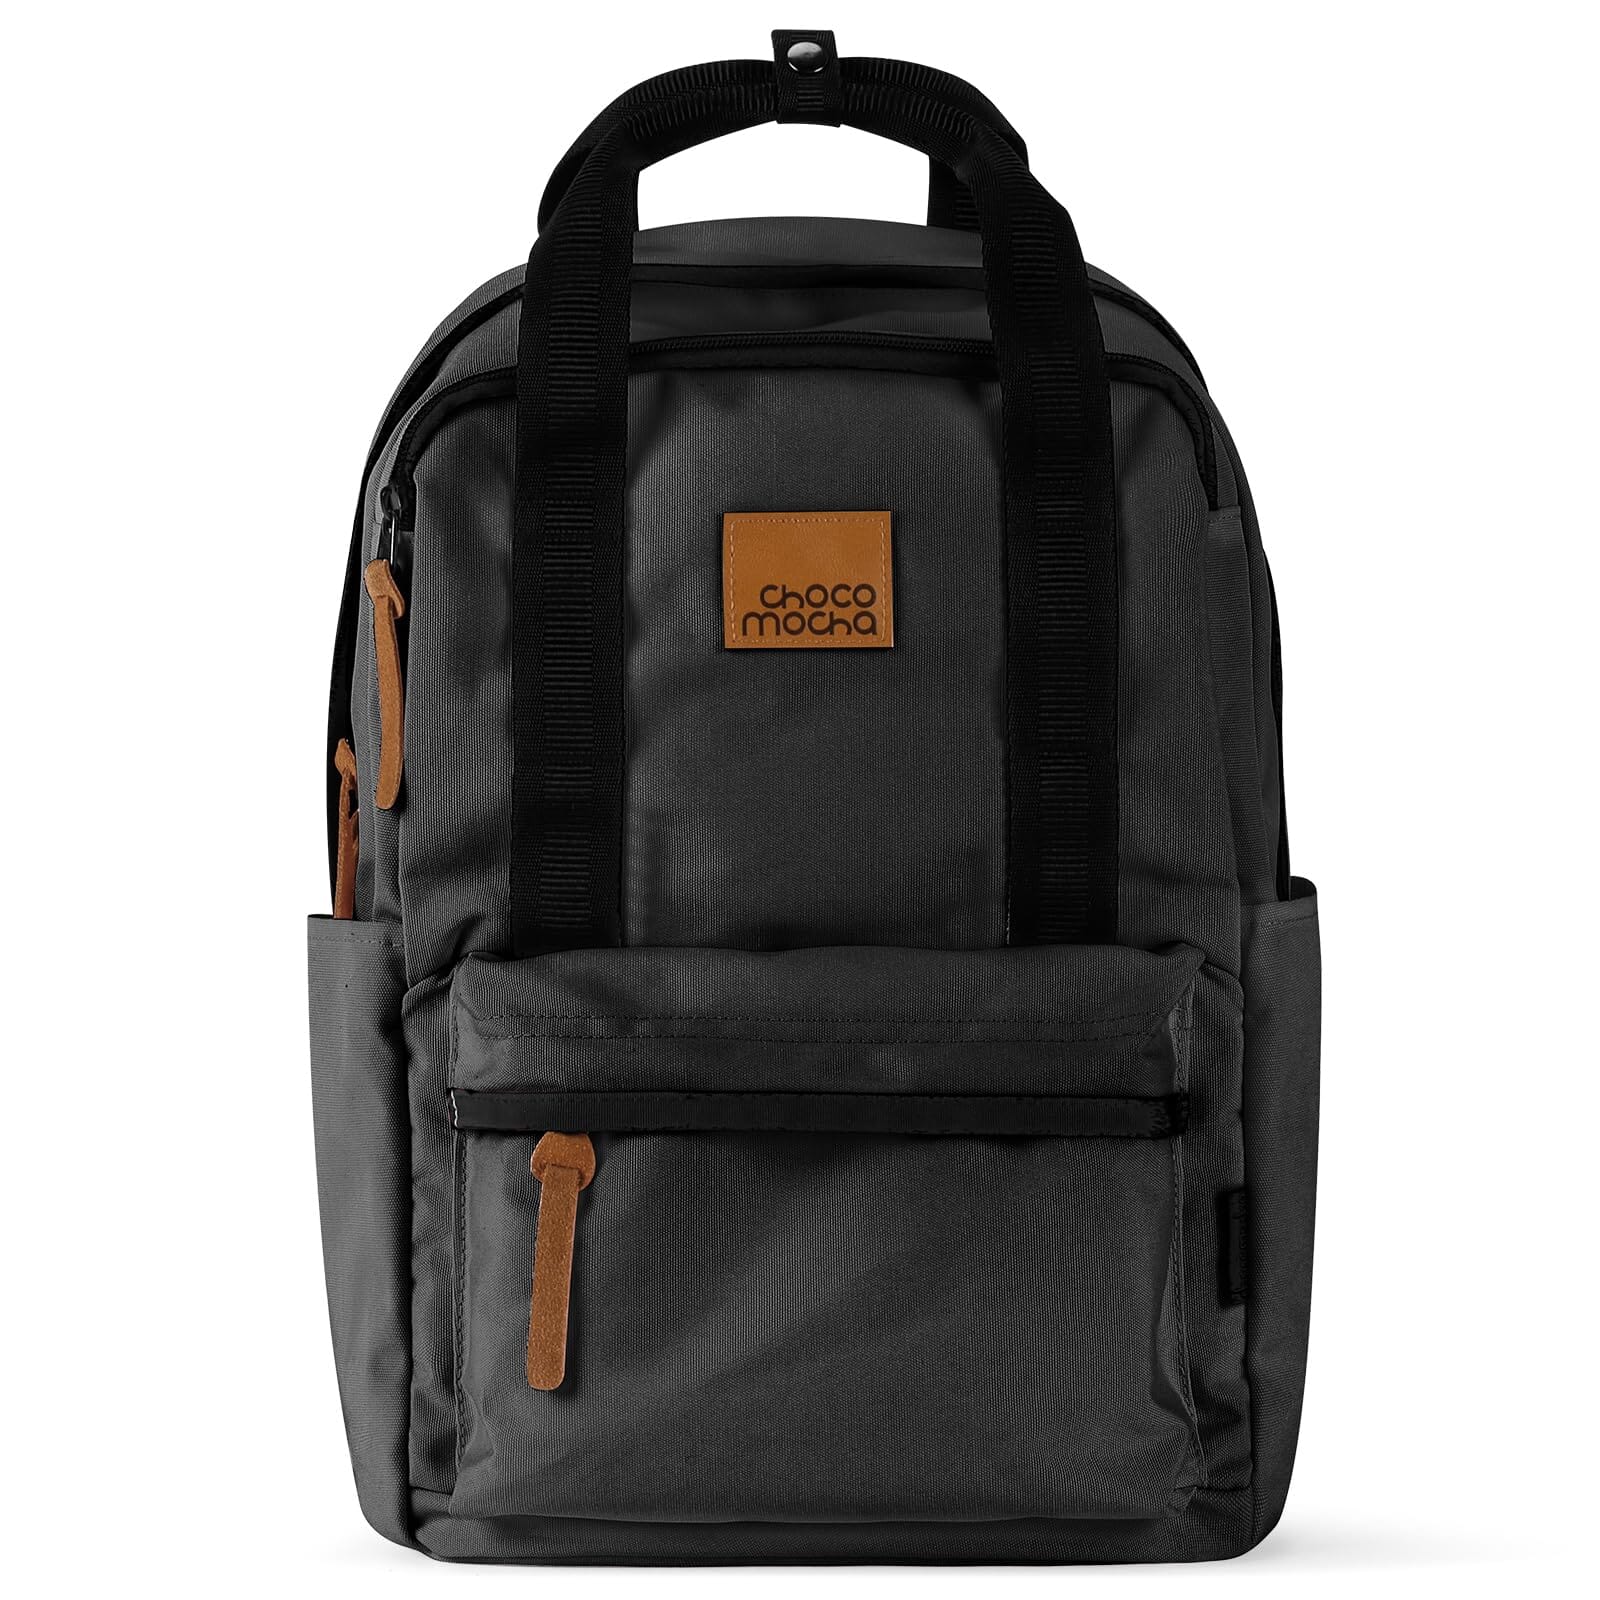 Choco Mocha Black Backpack for Teen Girls, Travel Middle School Backpack for Girls High School College Bookbag 16 Inch chocomochakids 